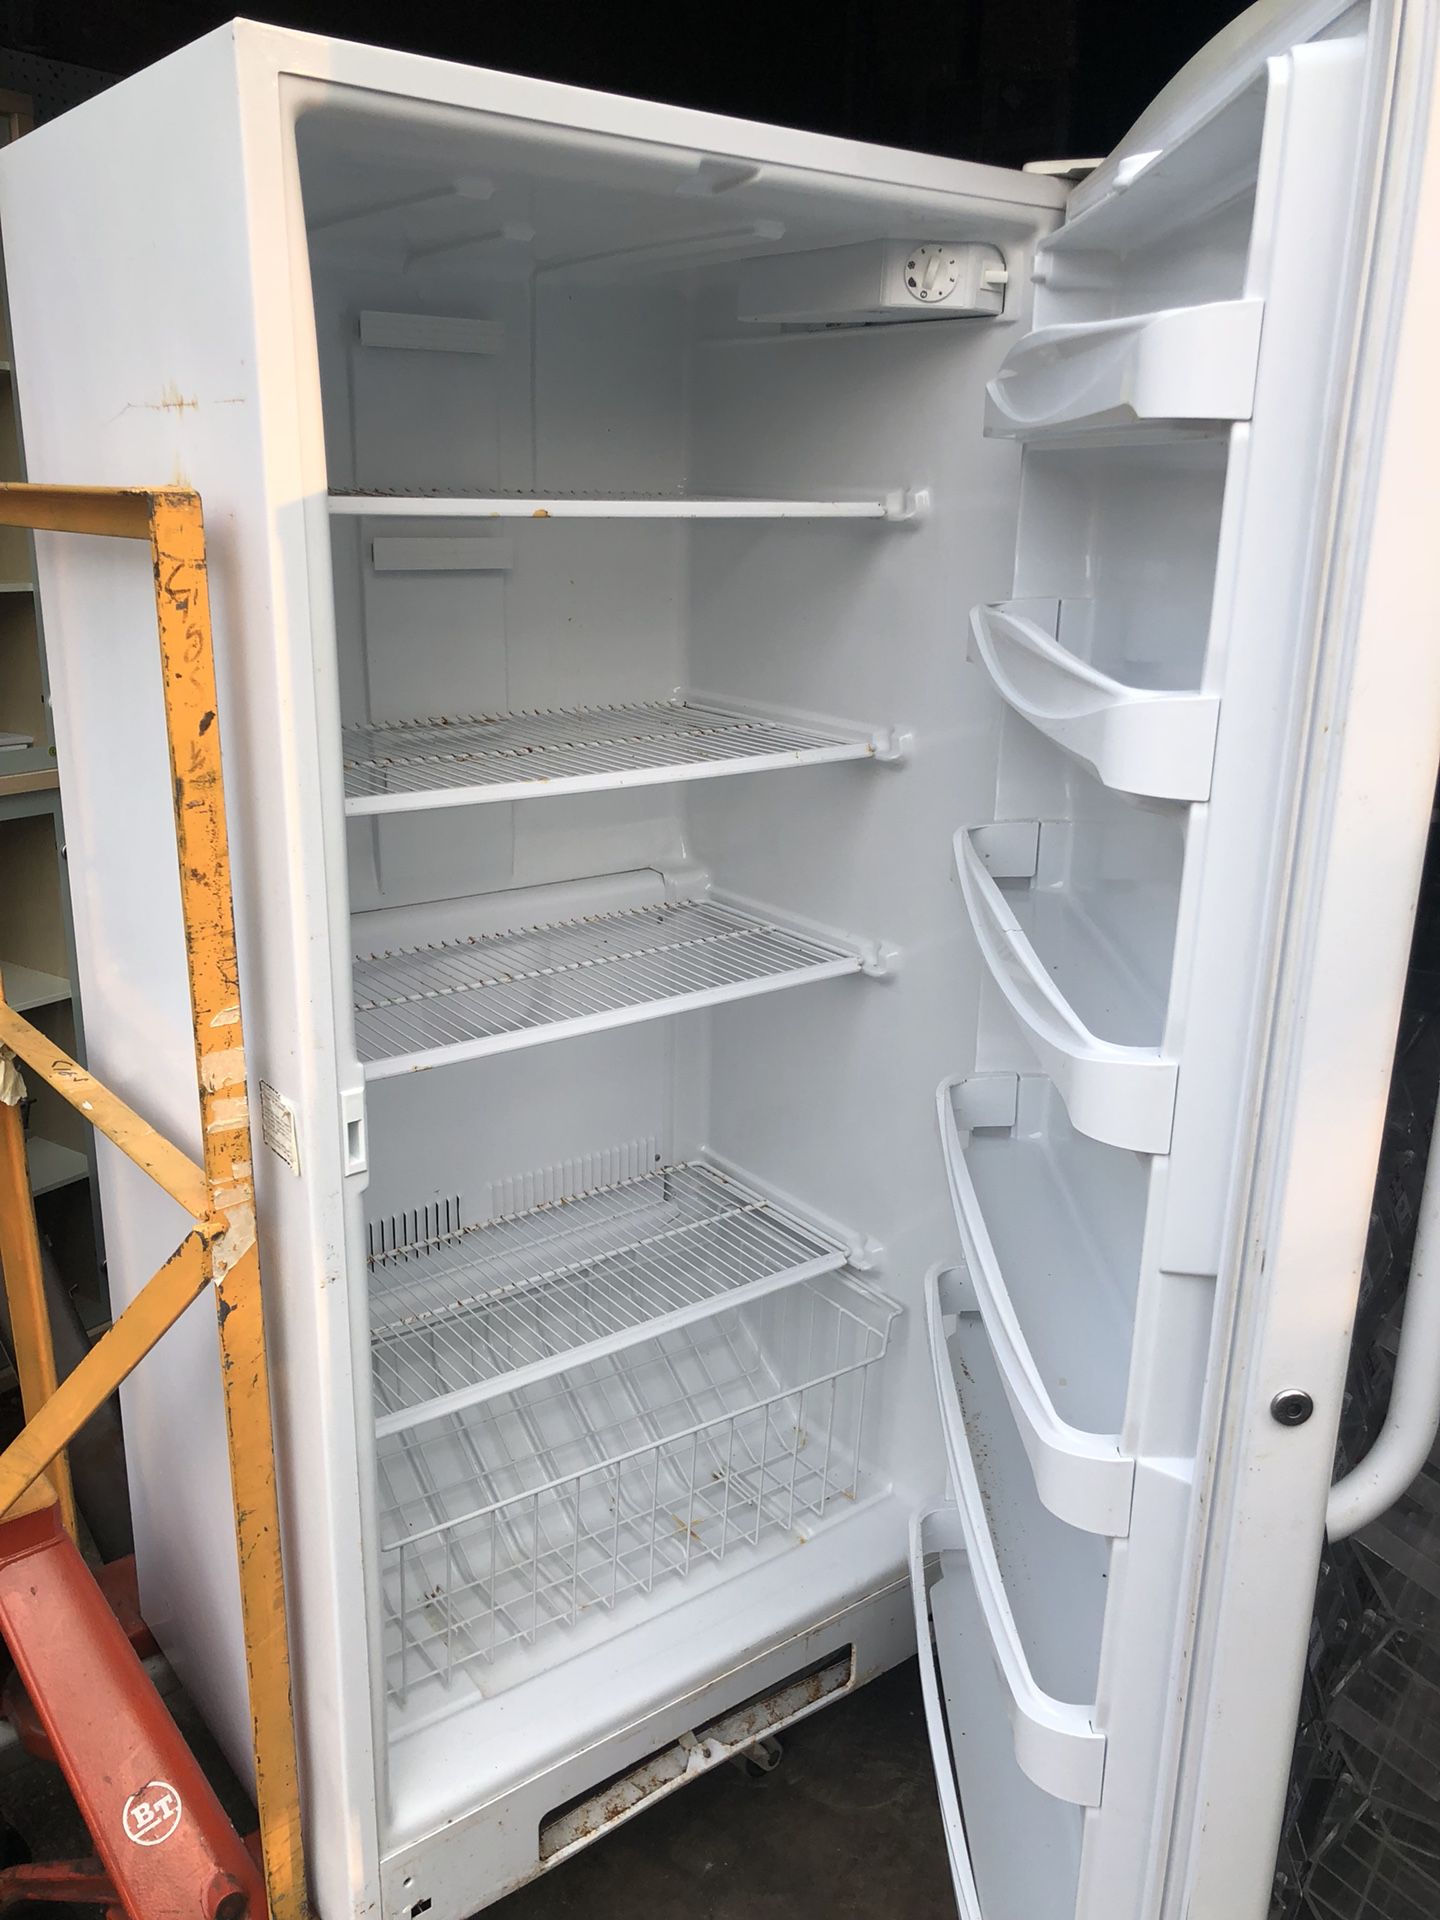 Maytag upright freezer